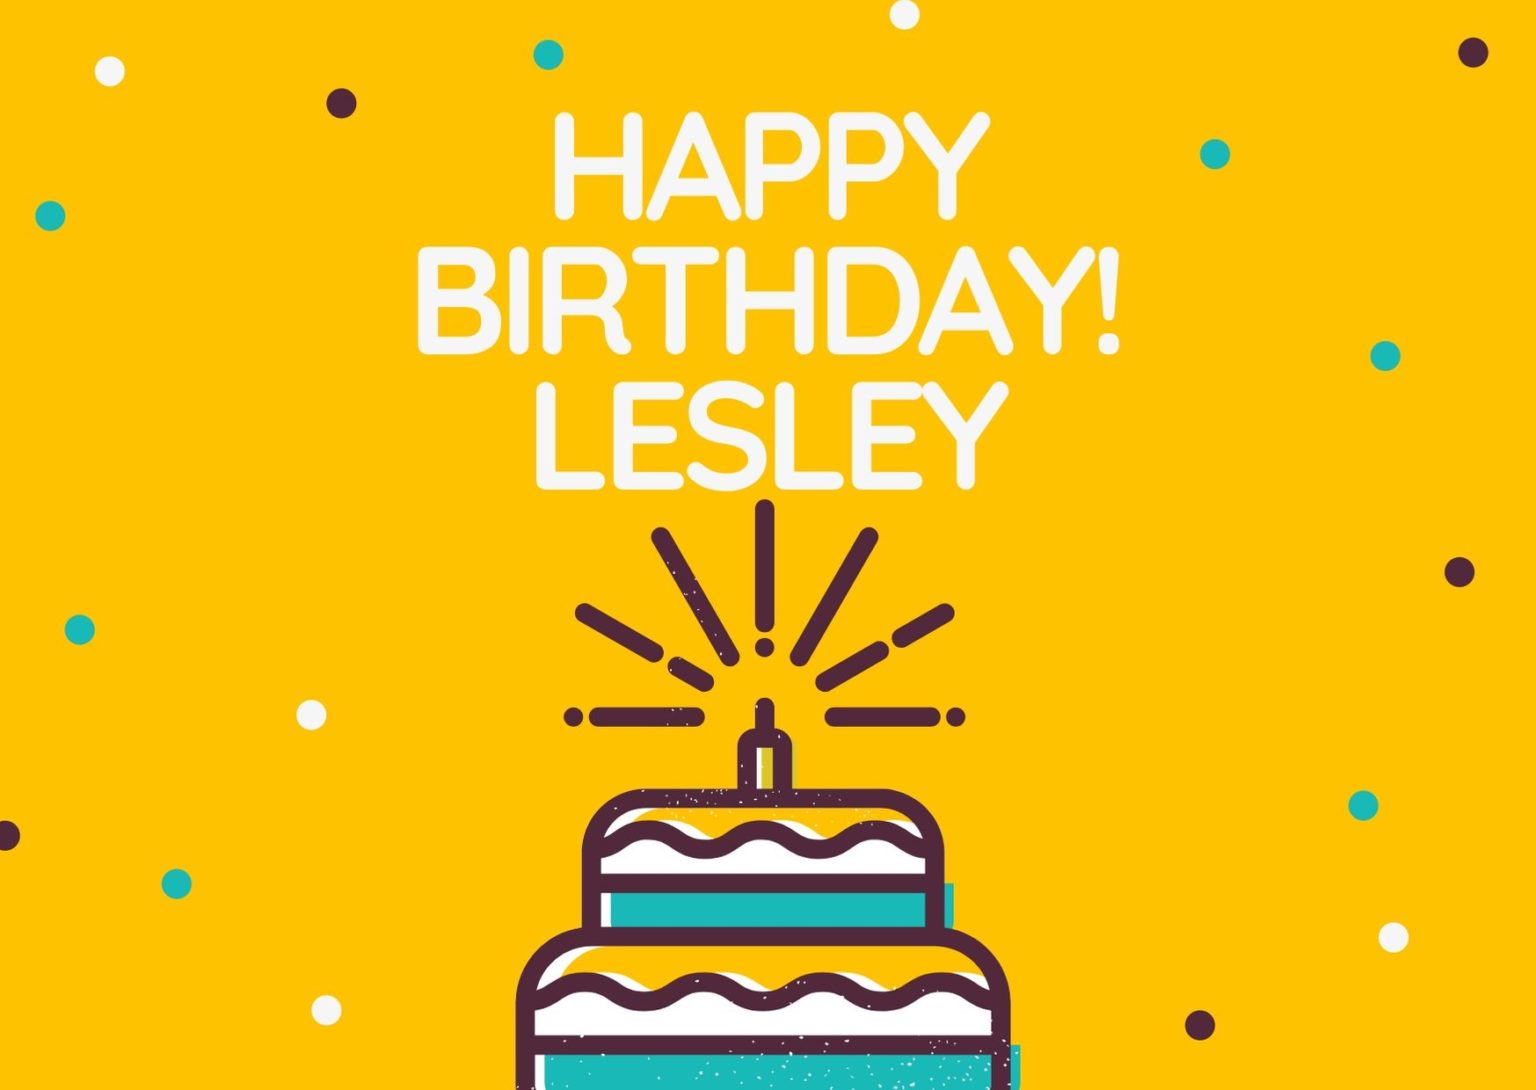 Happy Birthday Lesley!